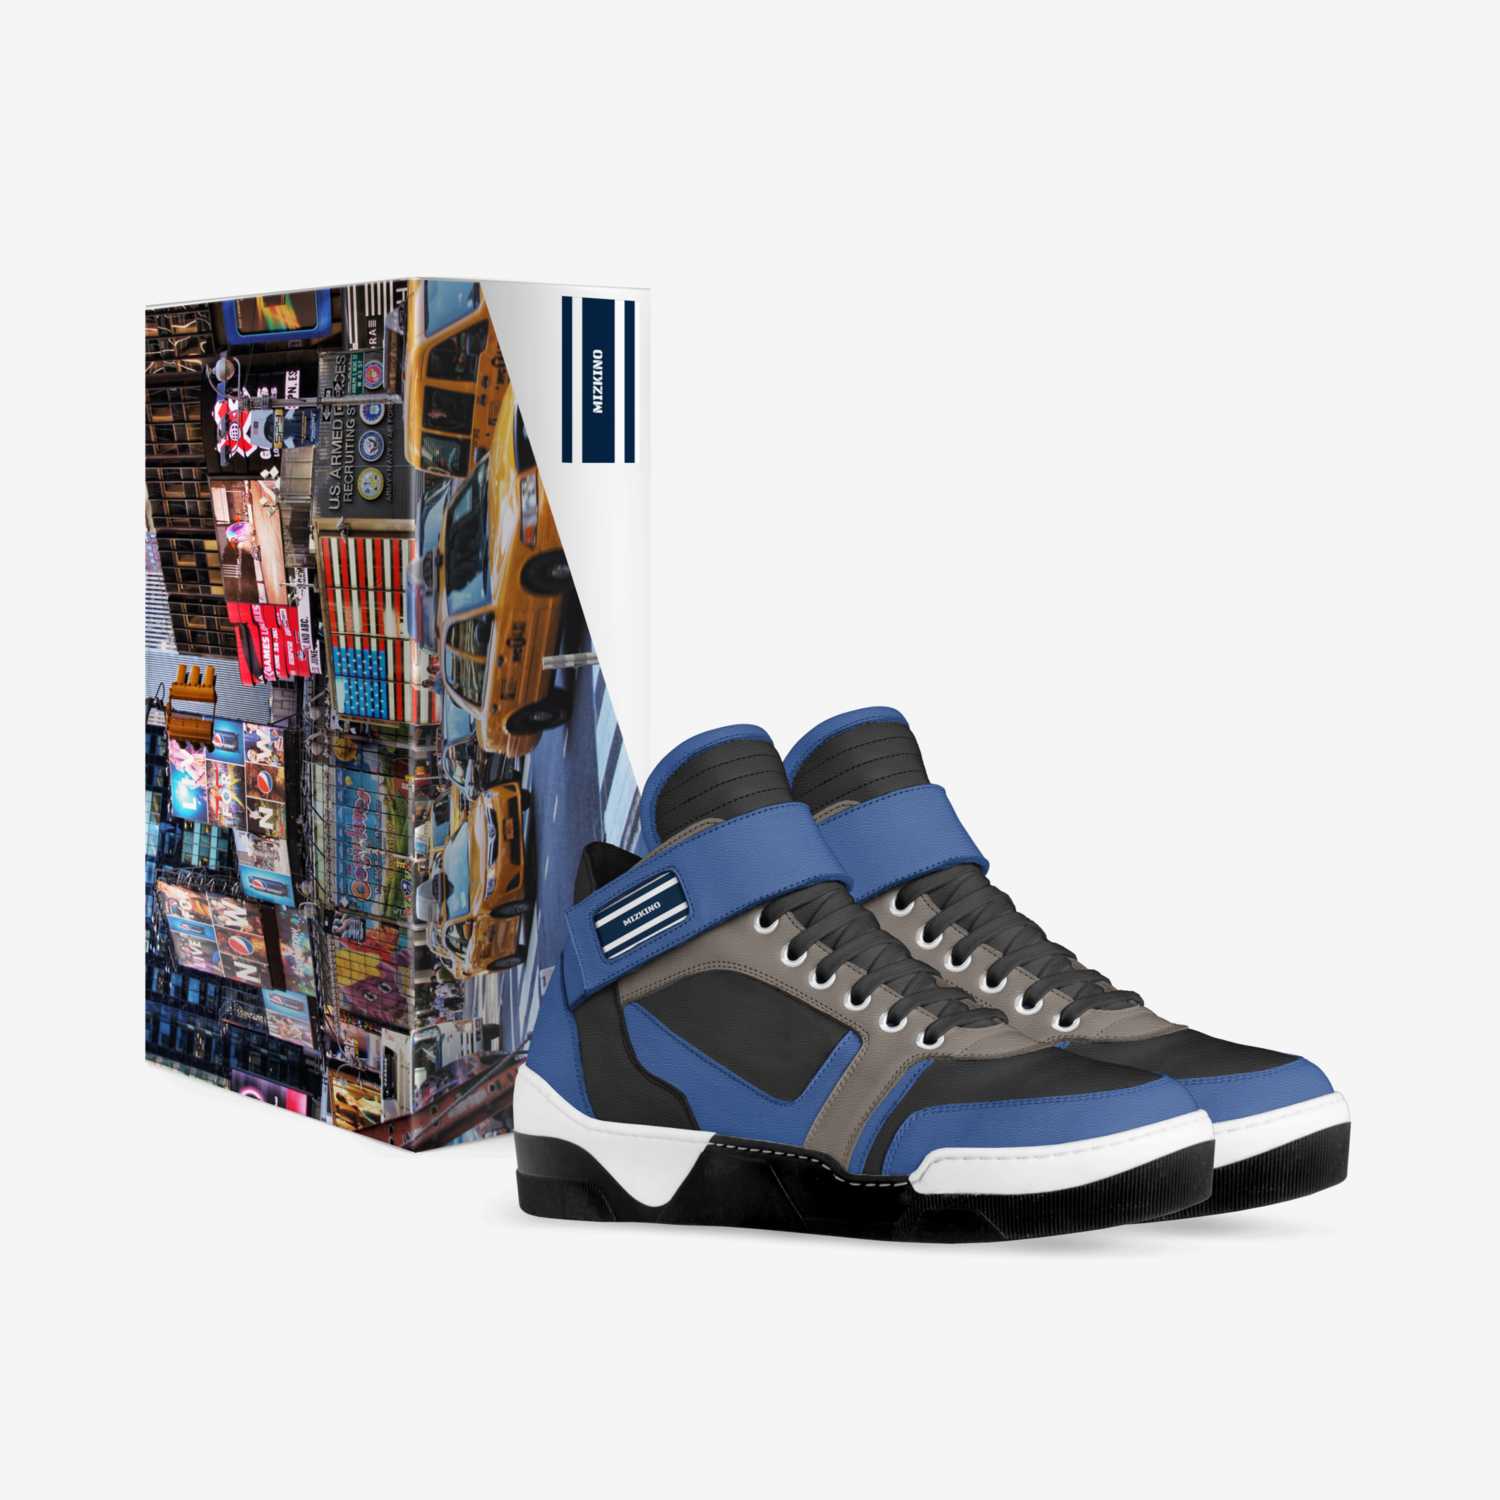 MIZKINO custom made in Italy shoes by Andreas Tullgren | Box view